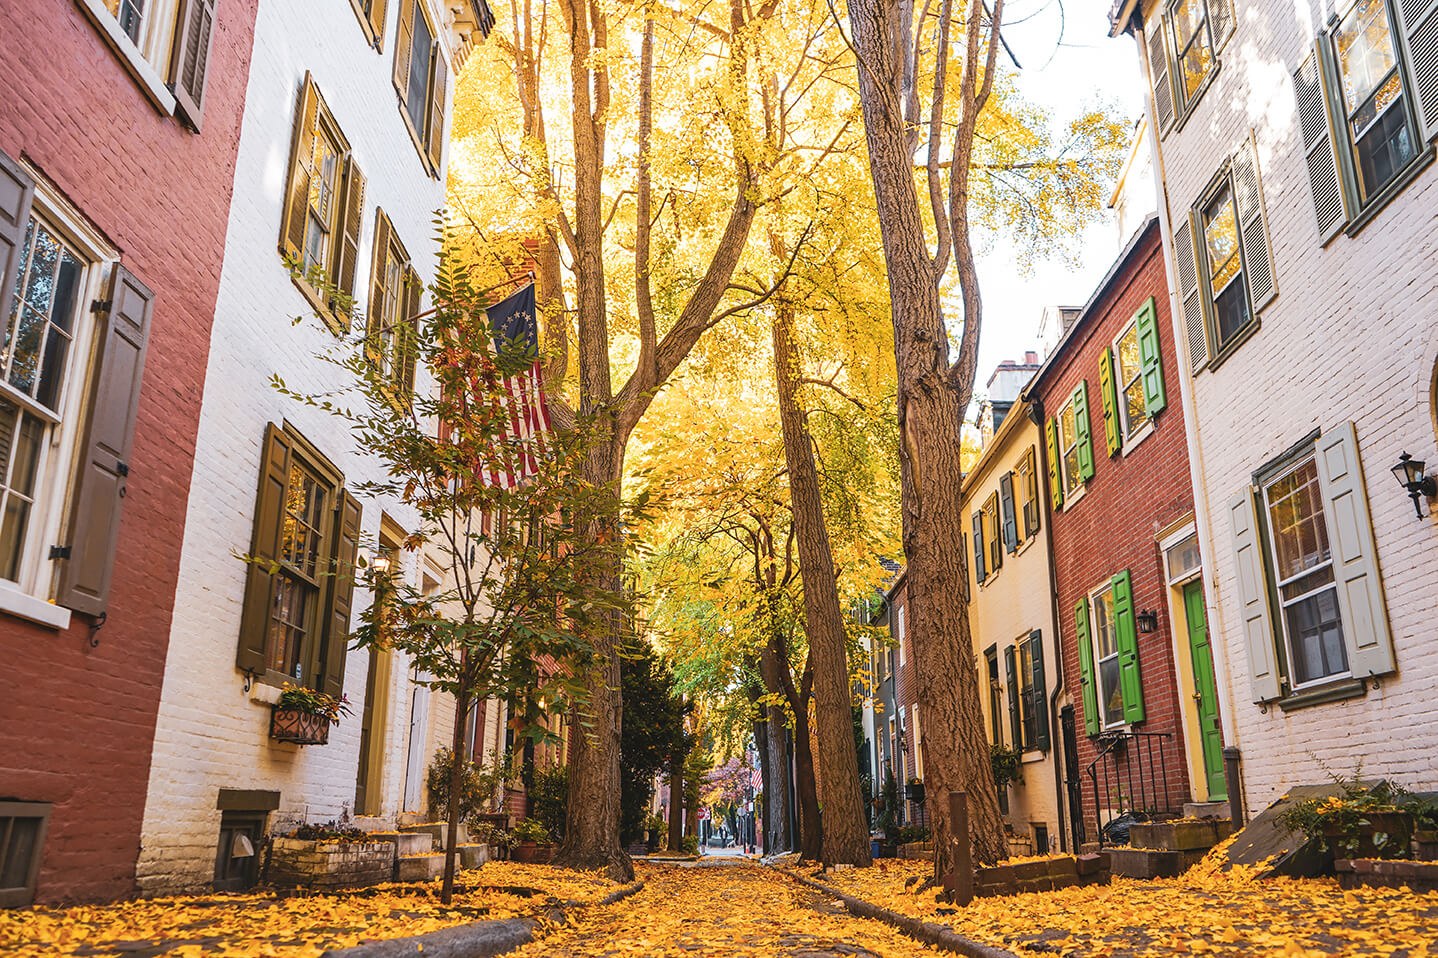 Tree lined street in Philadelphia covered in orange fall leaves